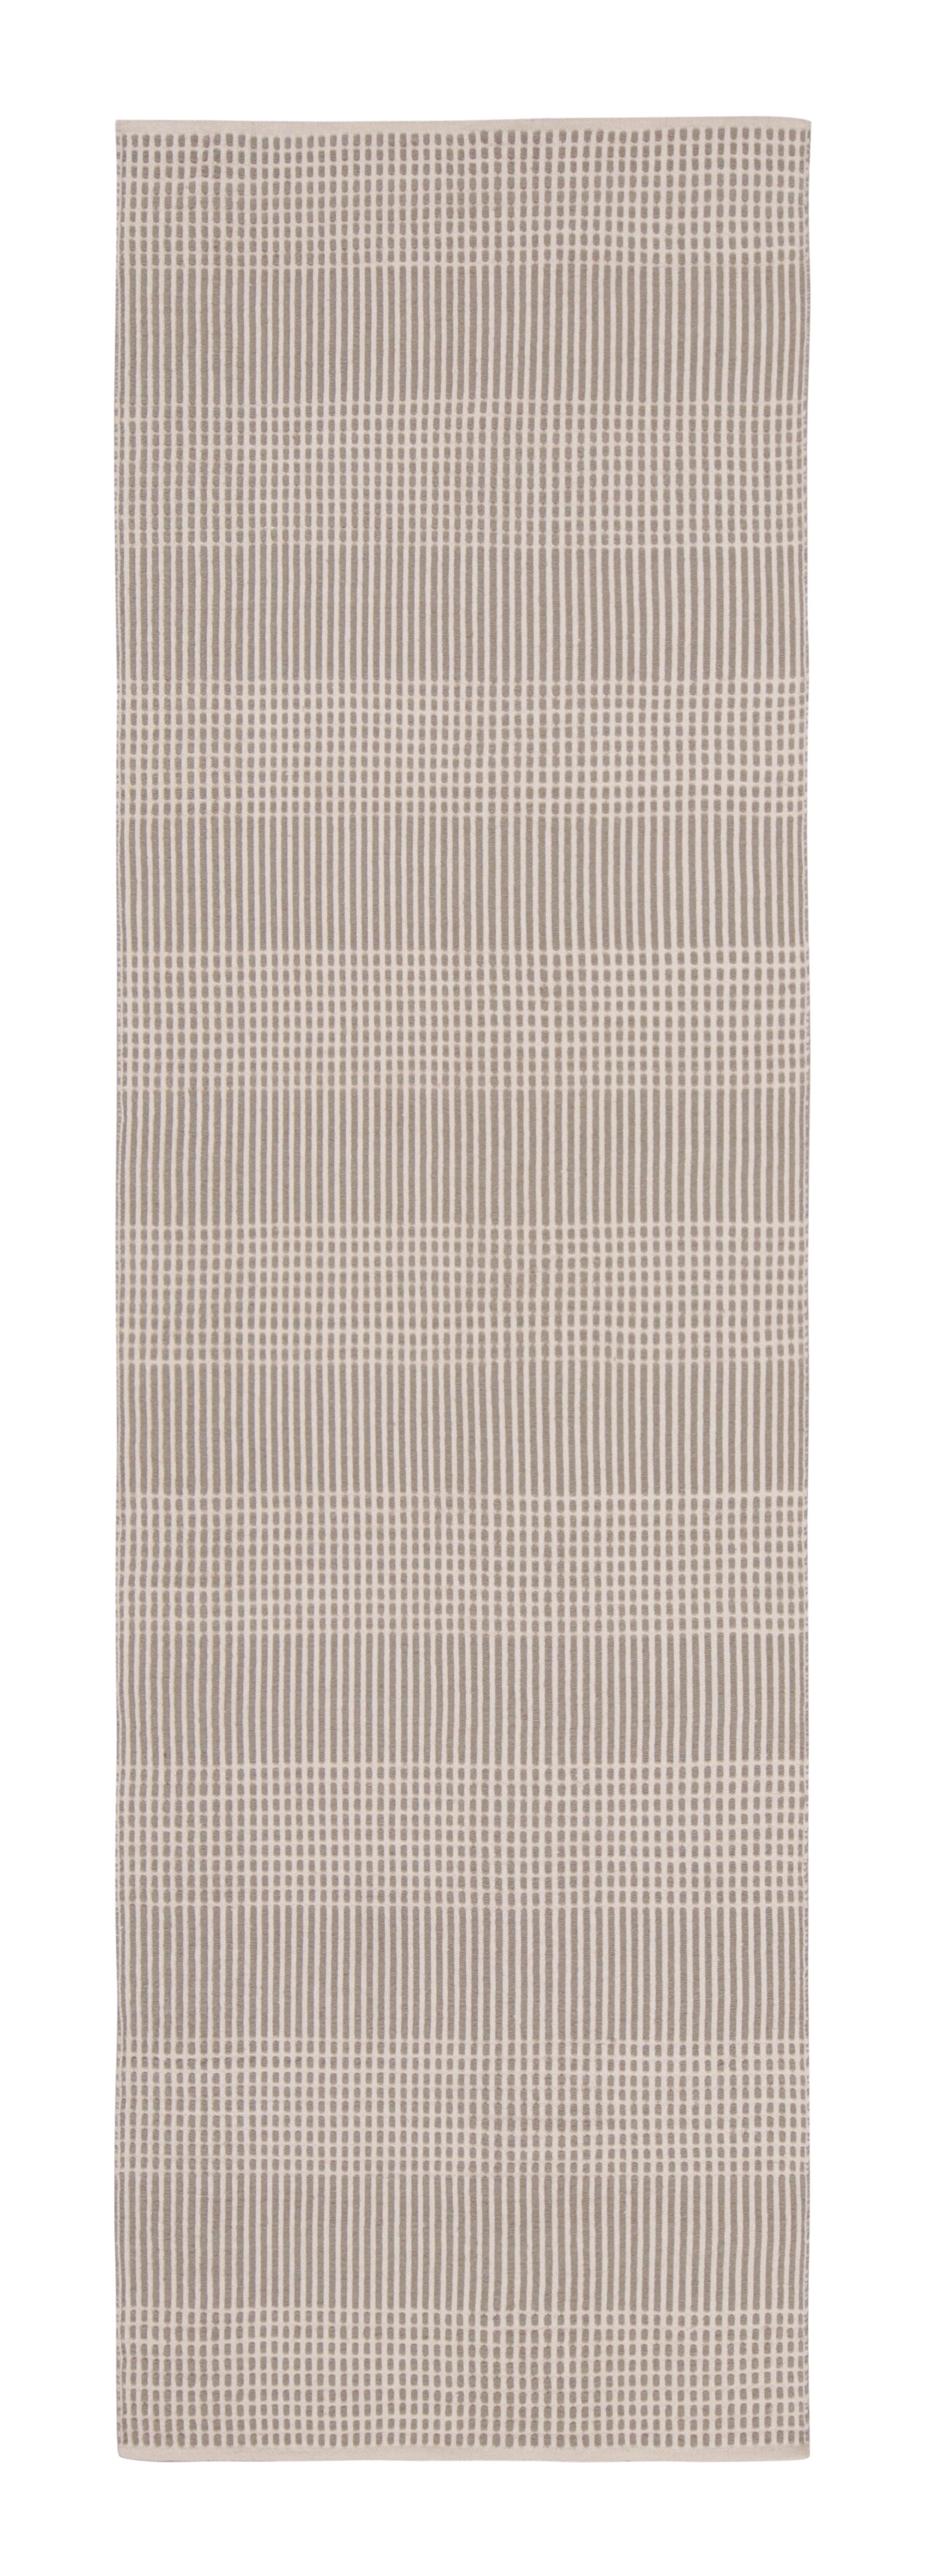 Rug & Kilim's Modern Flat-Weave Beige Brown Geometric Striped Pattern For Sale